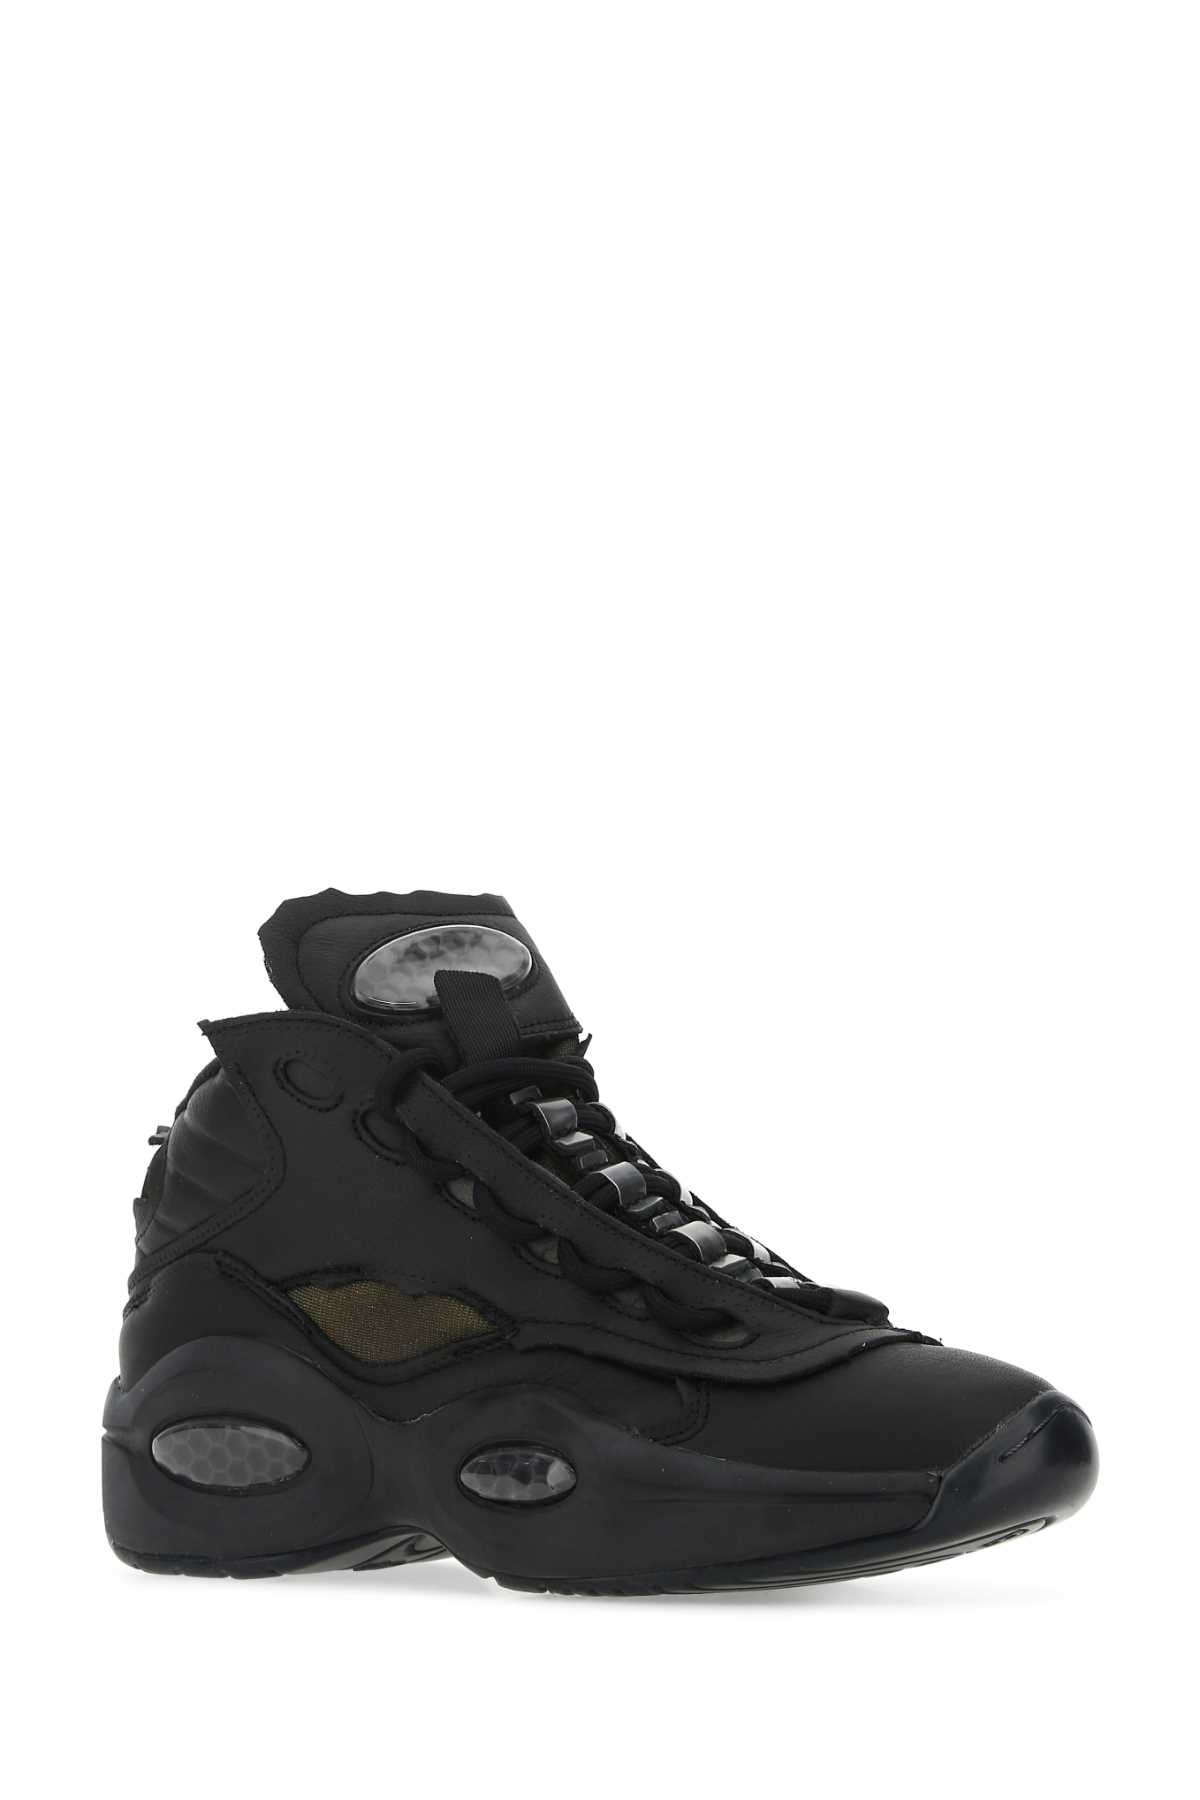 Reebok Black Leather Project 0 Tq Memory Of Sneakers In Blackftwwhtblack